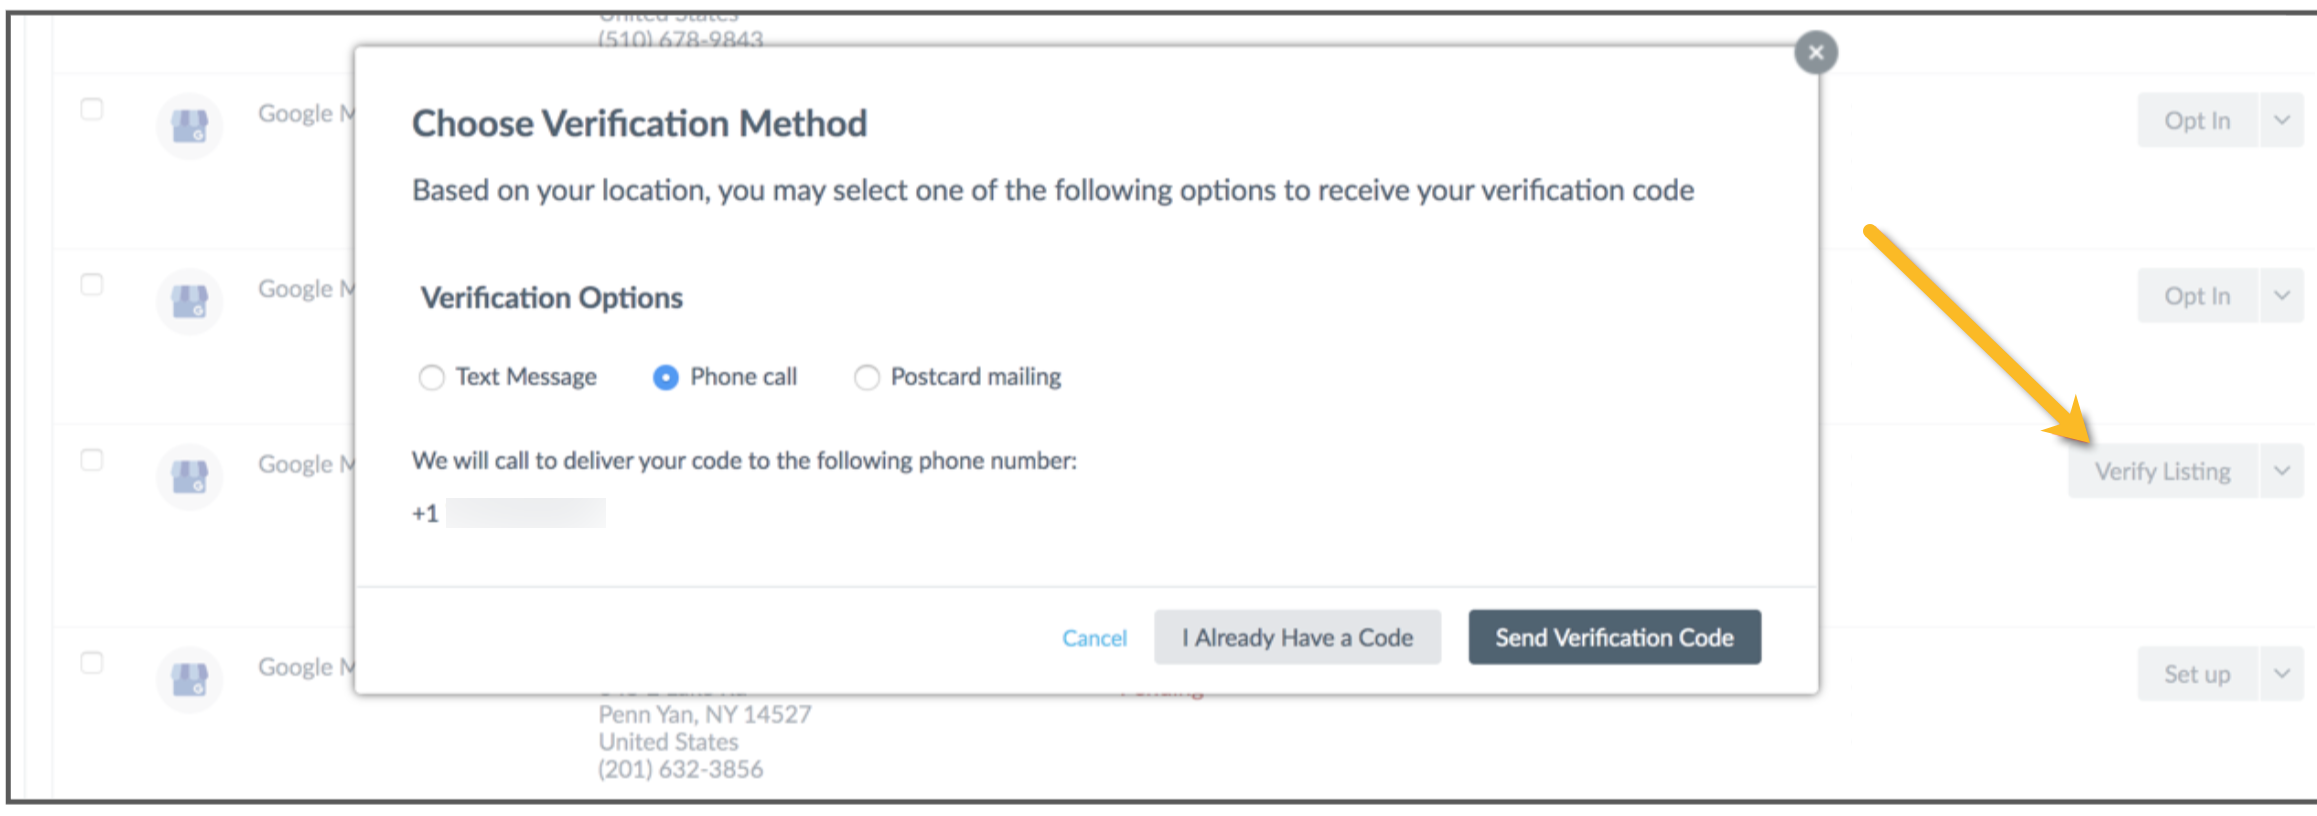 choose verification method modal